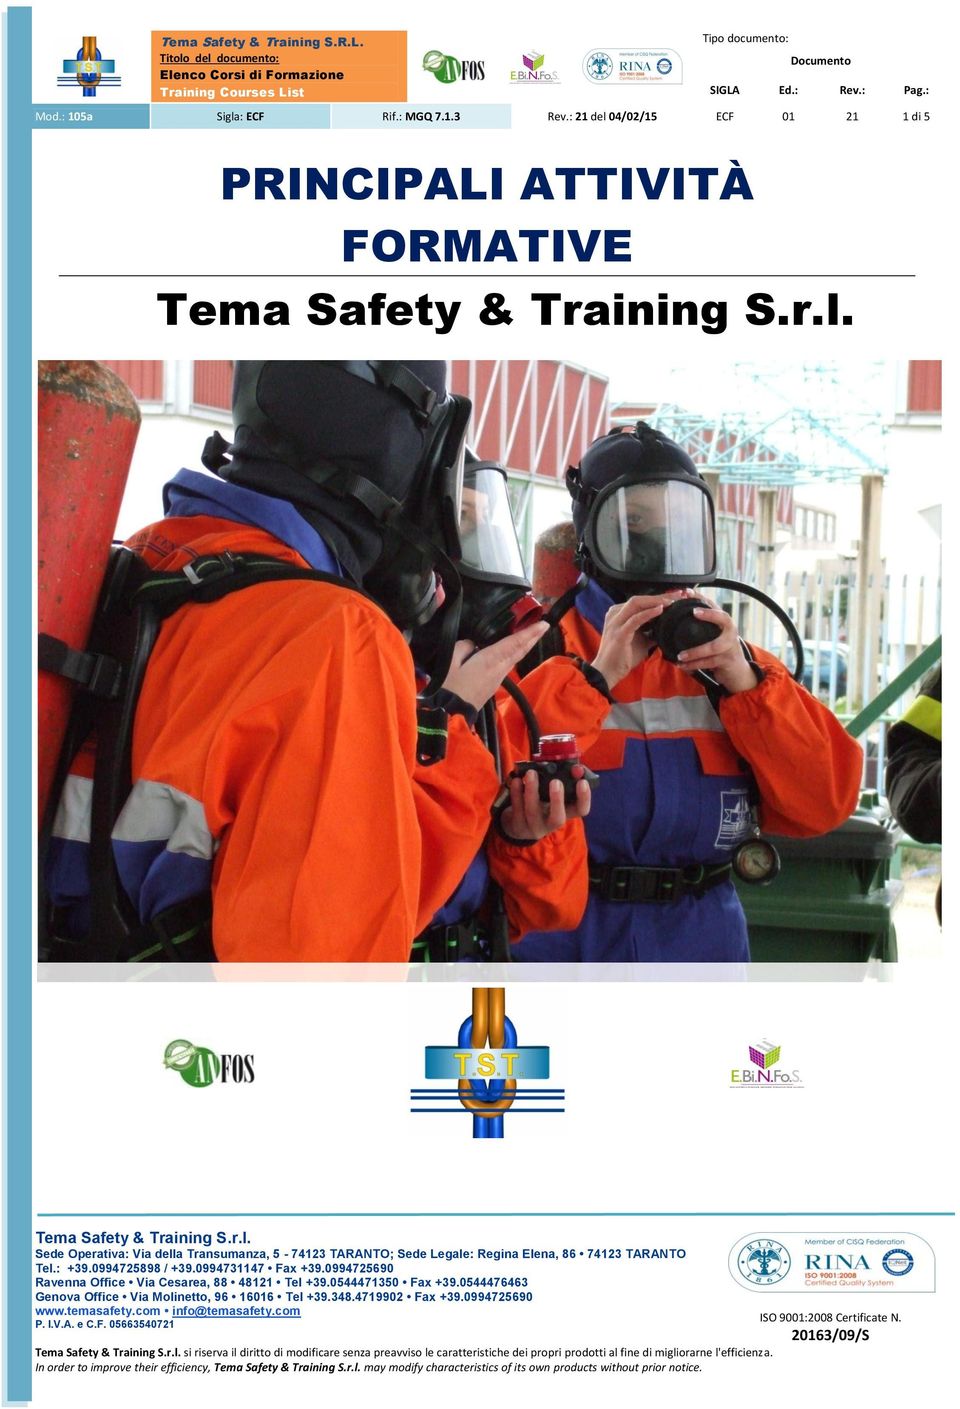 0994725690 www.temasafety.com info@temasafety.com P. I.V.A. e C.F. 05663540721 Tema Safety & Training S.r.l.